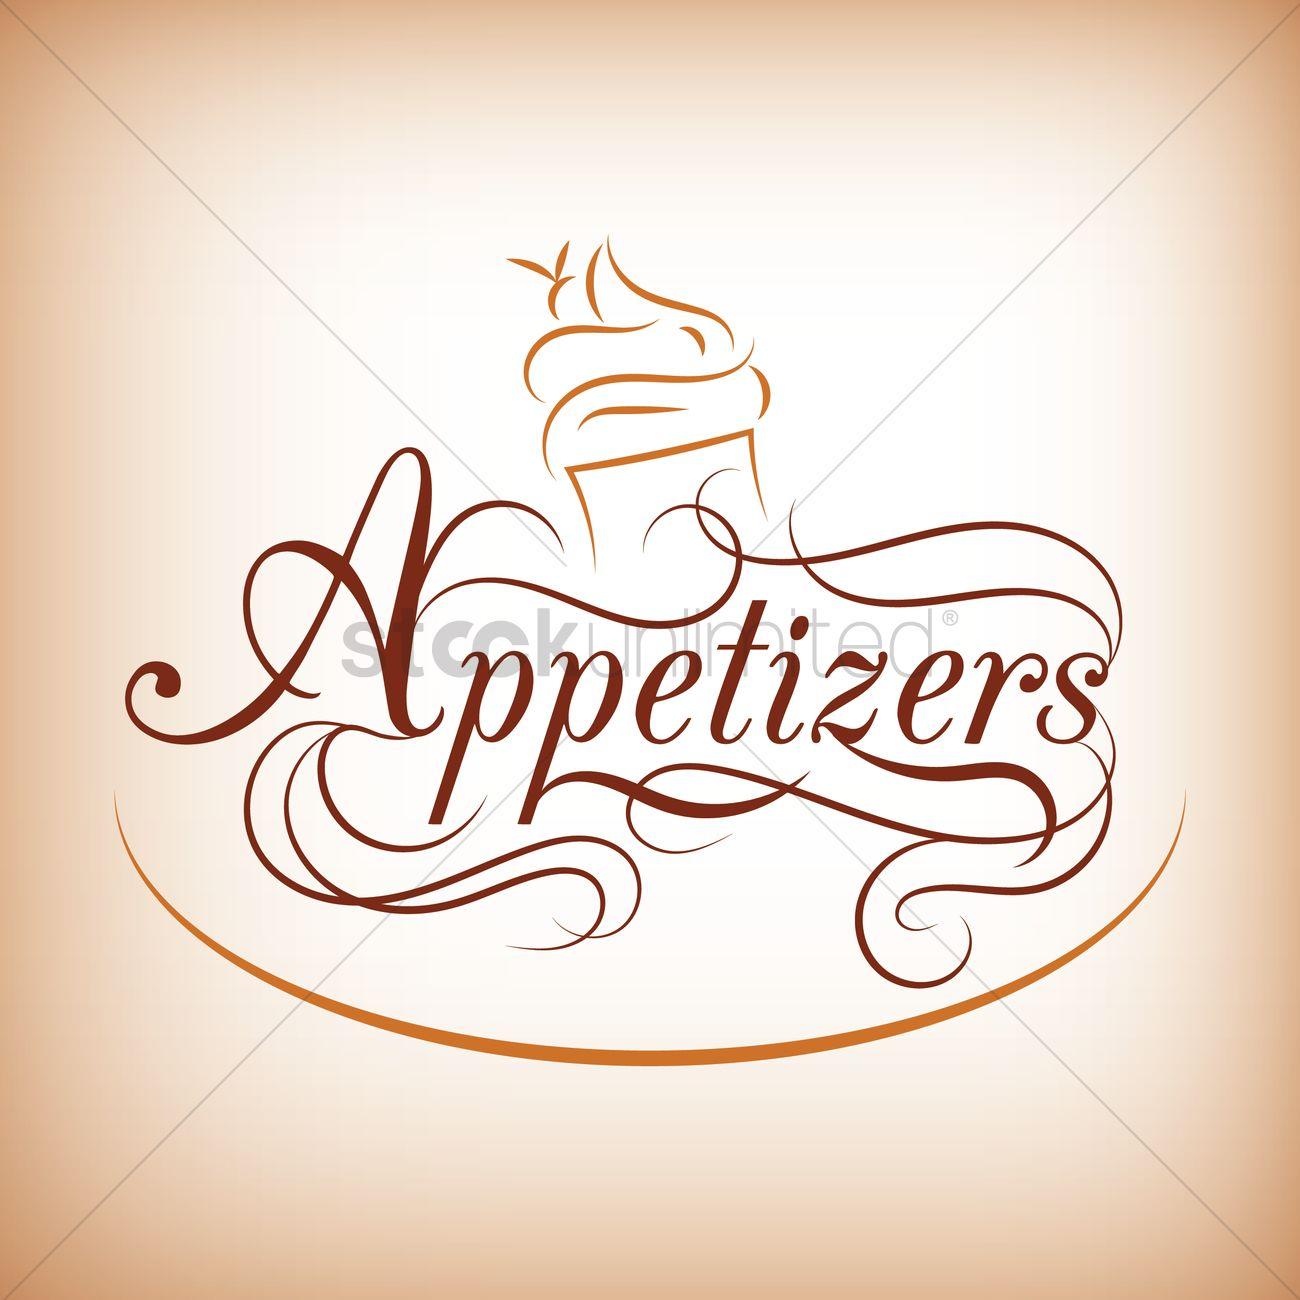 Appetizers Logo - Appetizers menu title Vector Image